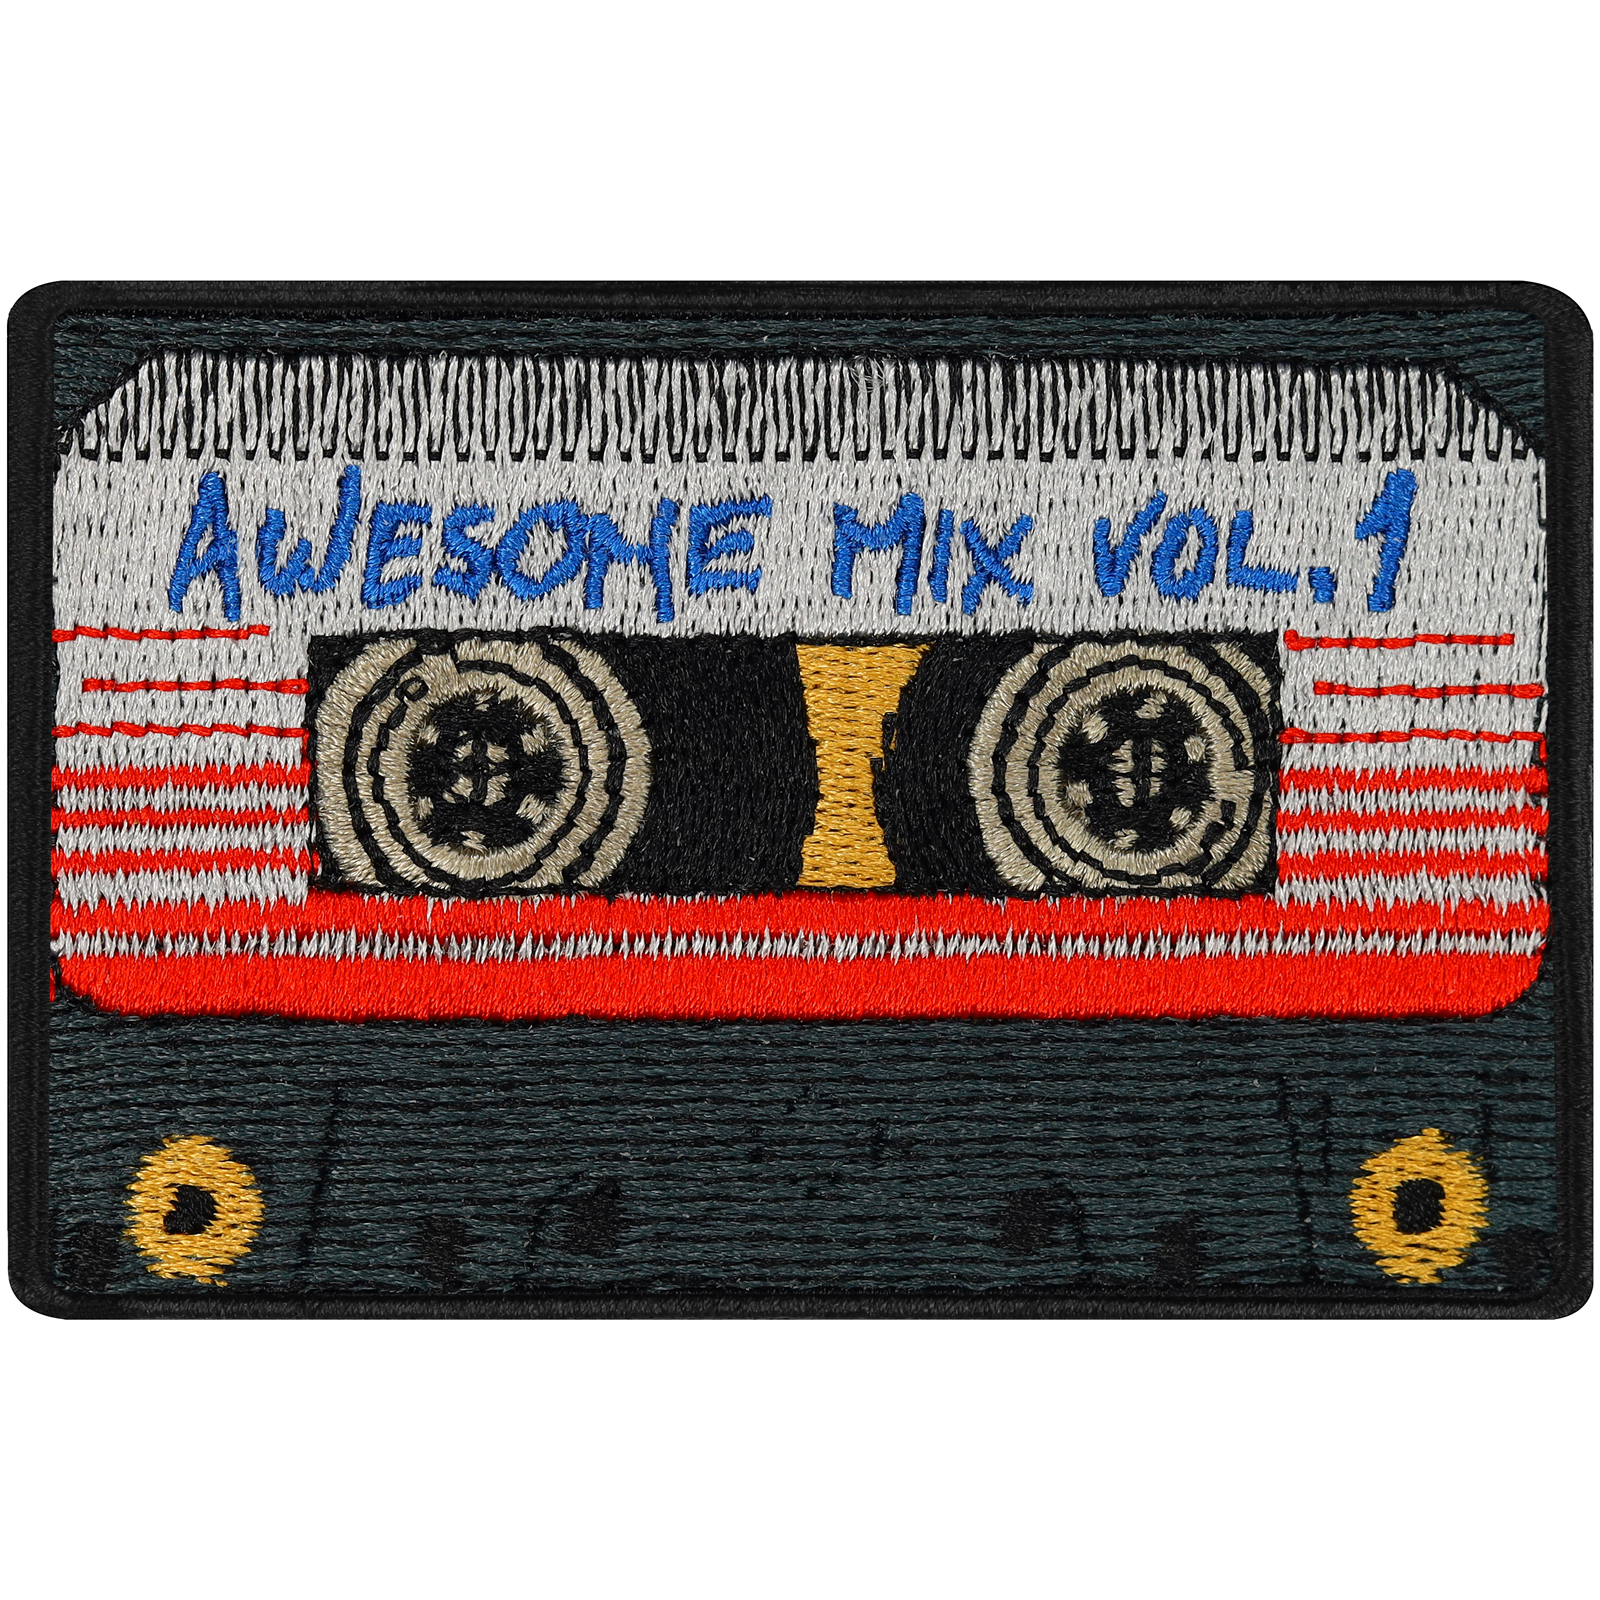 Awesome mix VOL. 1 - Radiokasette - Patch